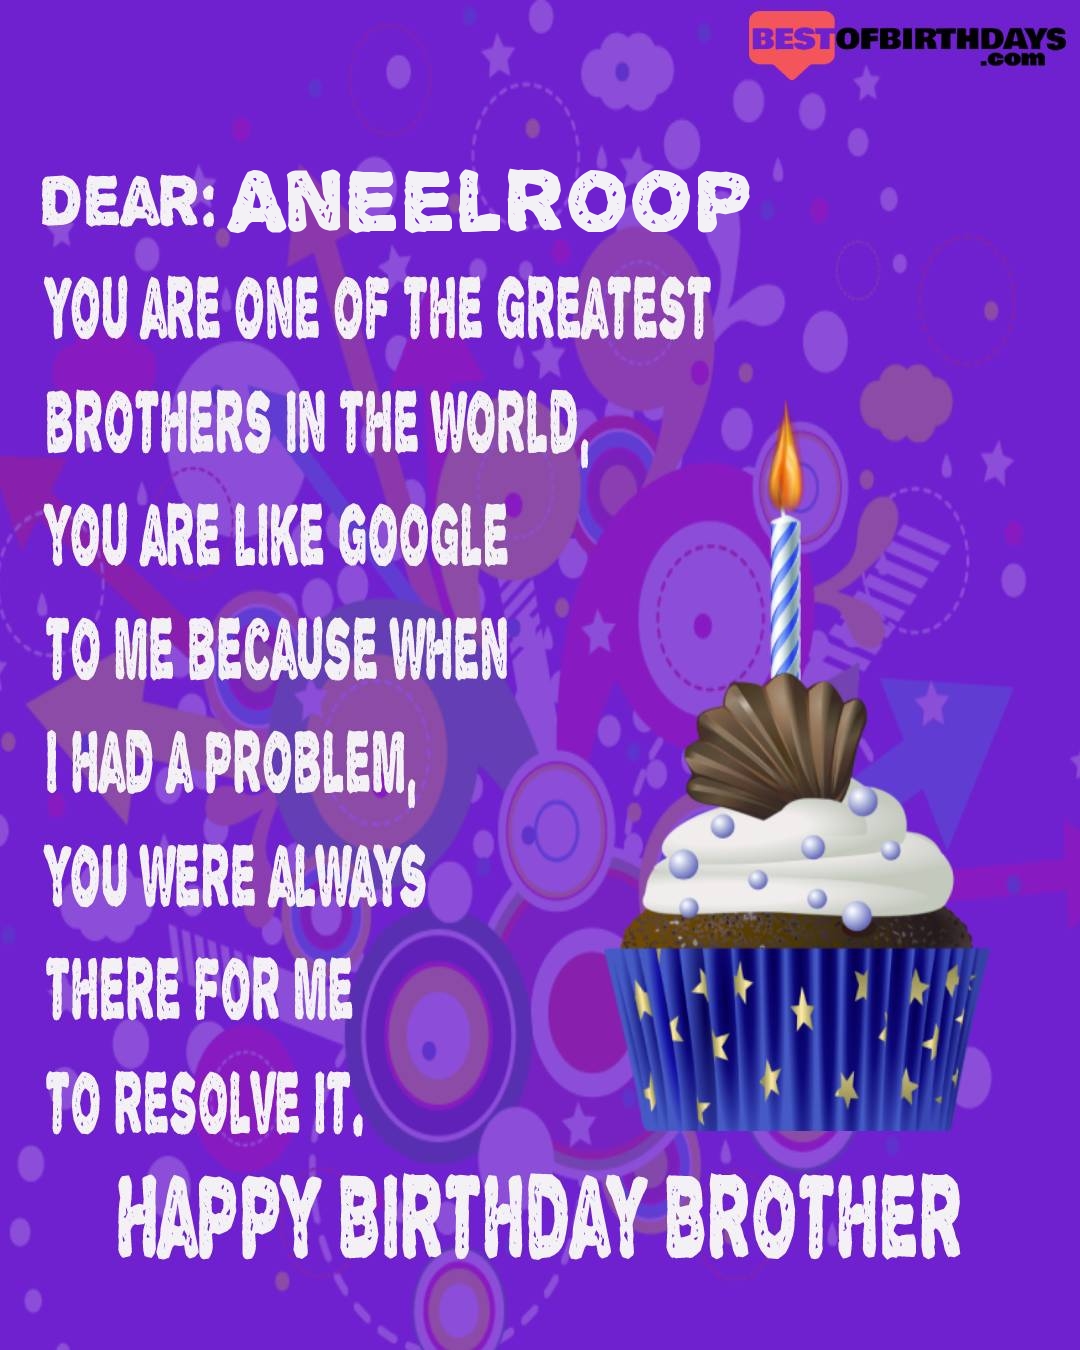 Happy birthday aneelroop bhai brother bro